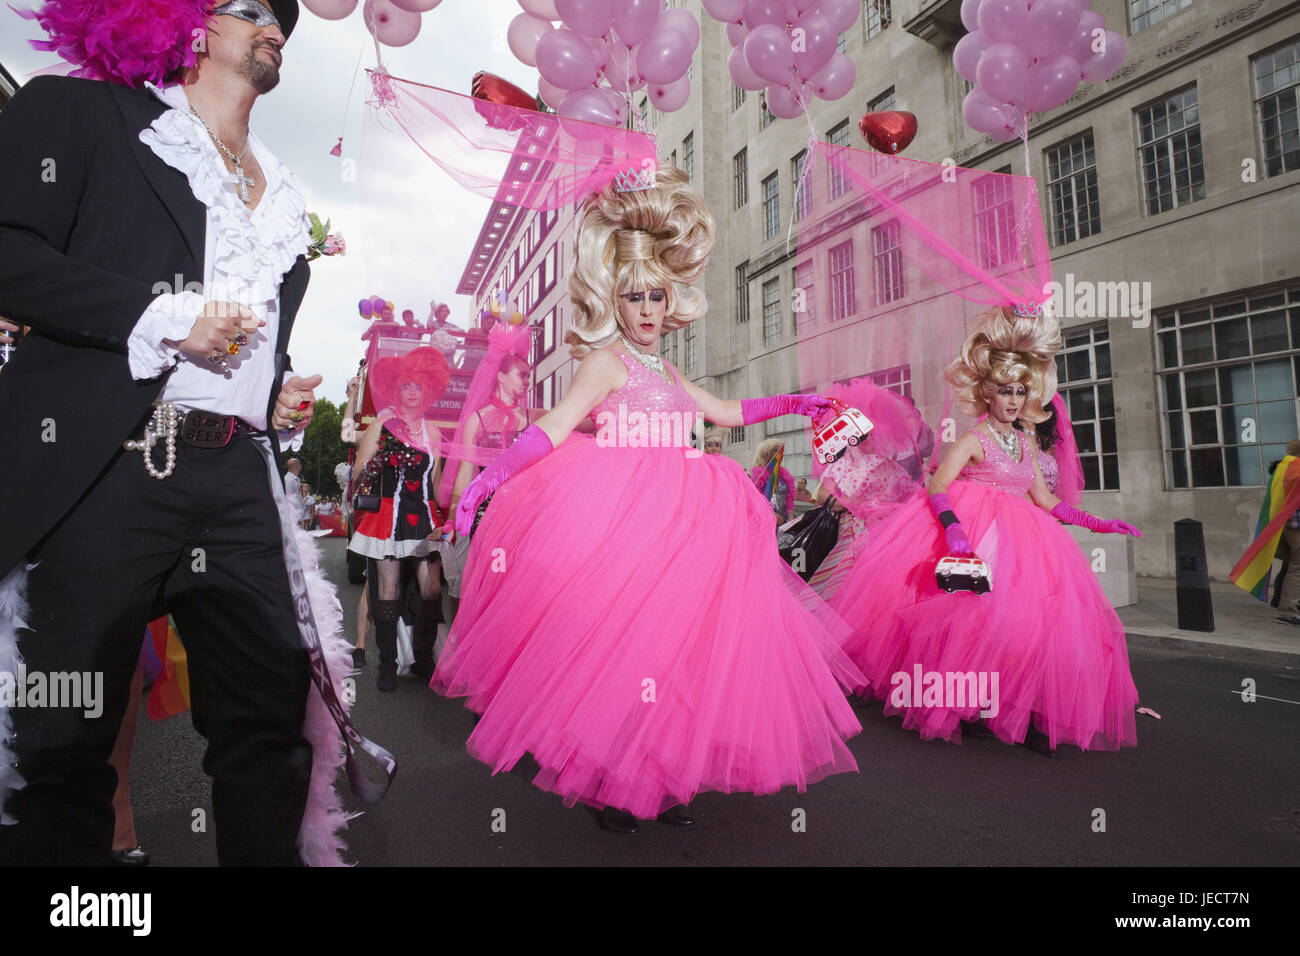 England, London, Gay Pride Parade, Menschen, Rosa Kleidung, Stadt, Festival, speichern, Festival, Pride Festival, Homosexuelle, rosa, Perücken, Verkleidungen, Menschen, geschminkten, Lächeln, Stockfoto